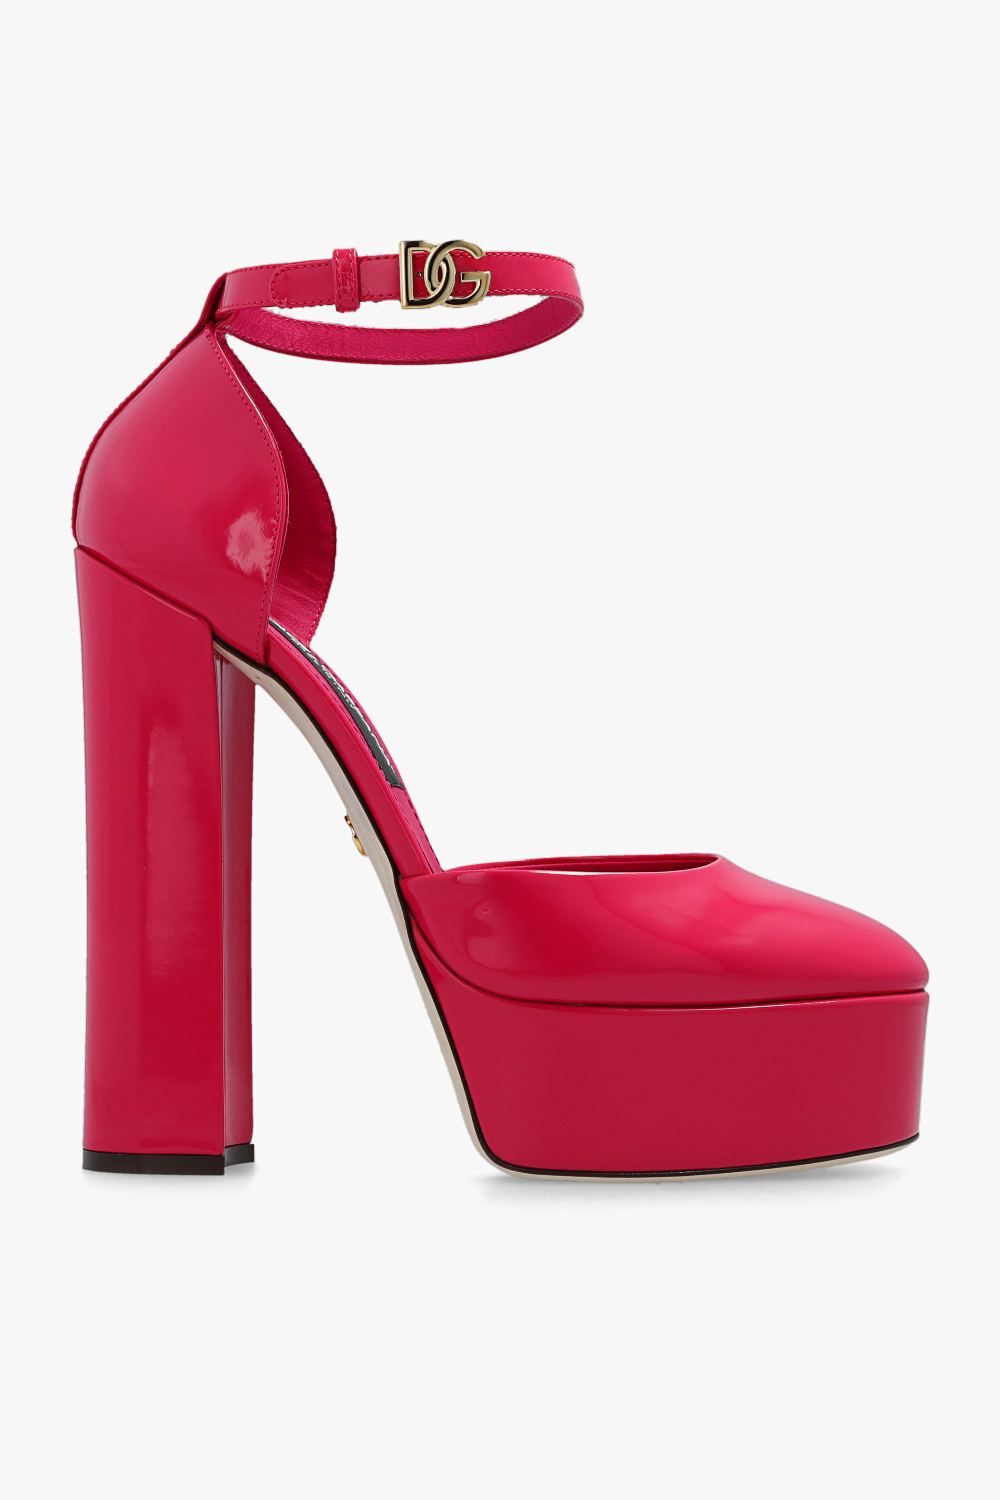 Dolce & Gabbana ‘Sharon’ platform pumps